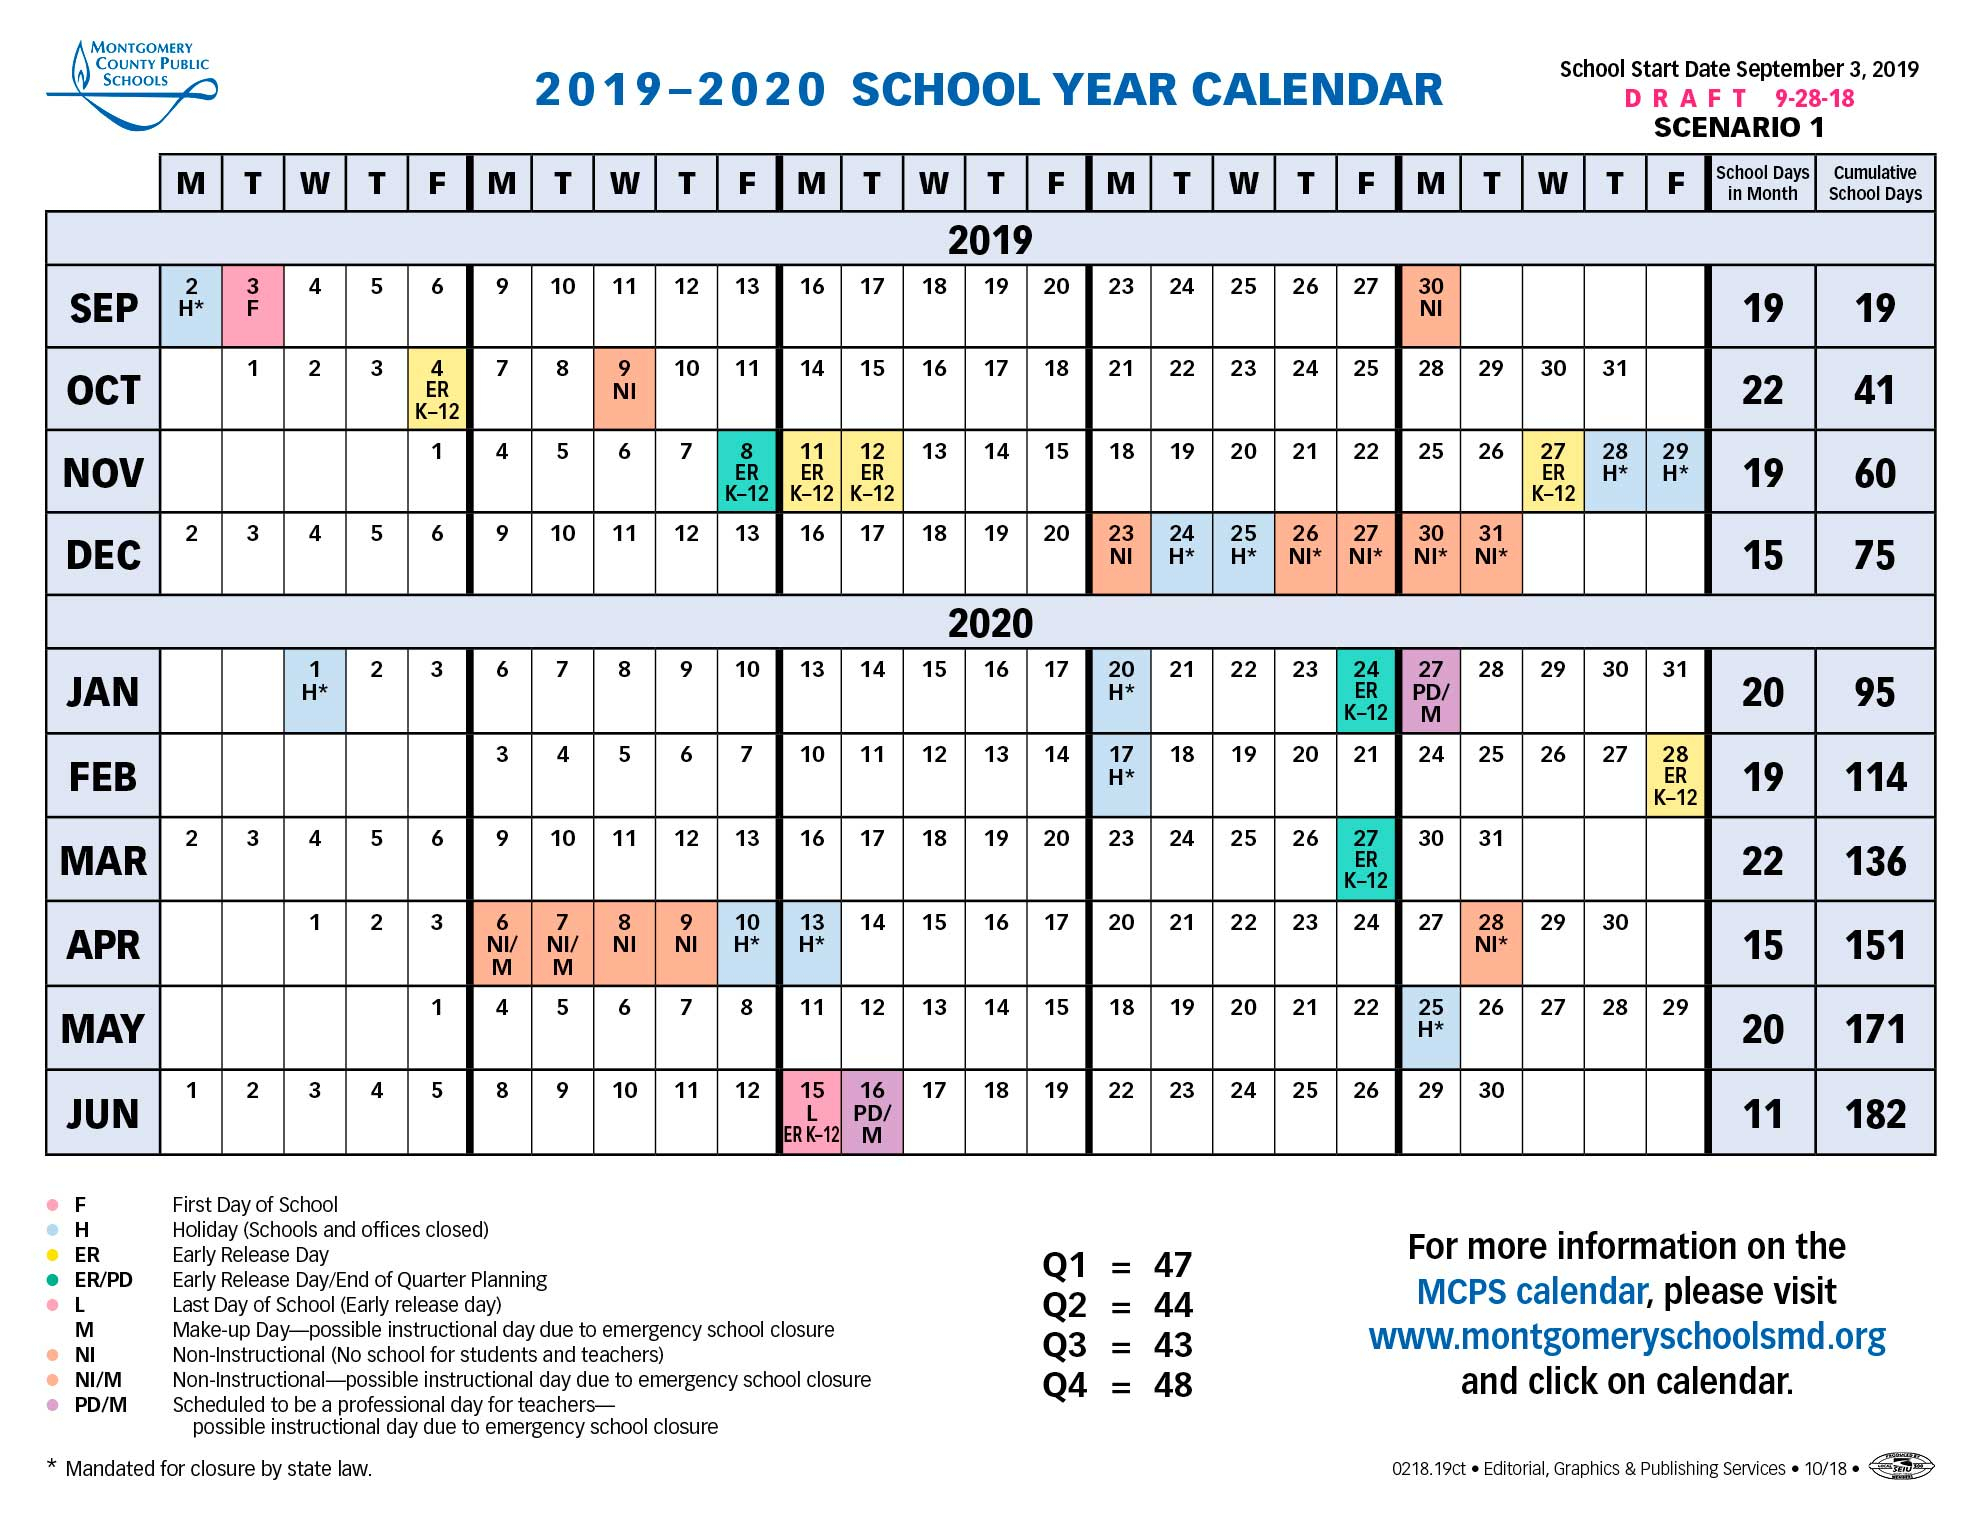 School Board Approves Longer Spring Break For 2019-2020